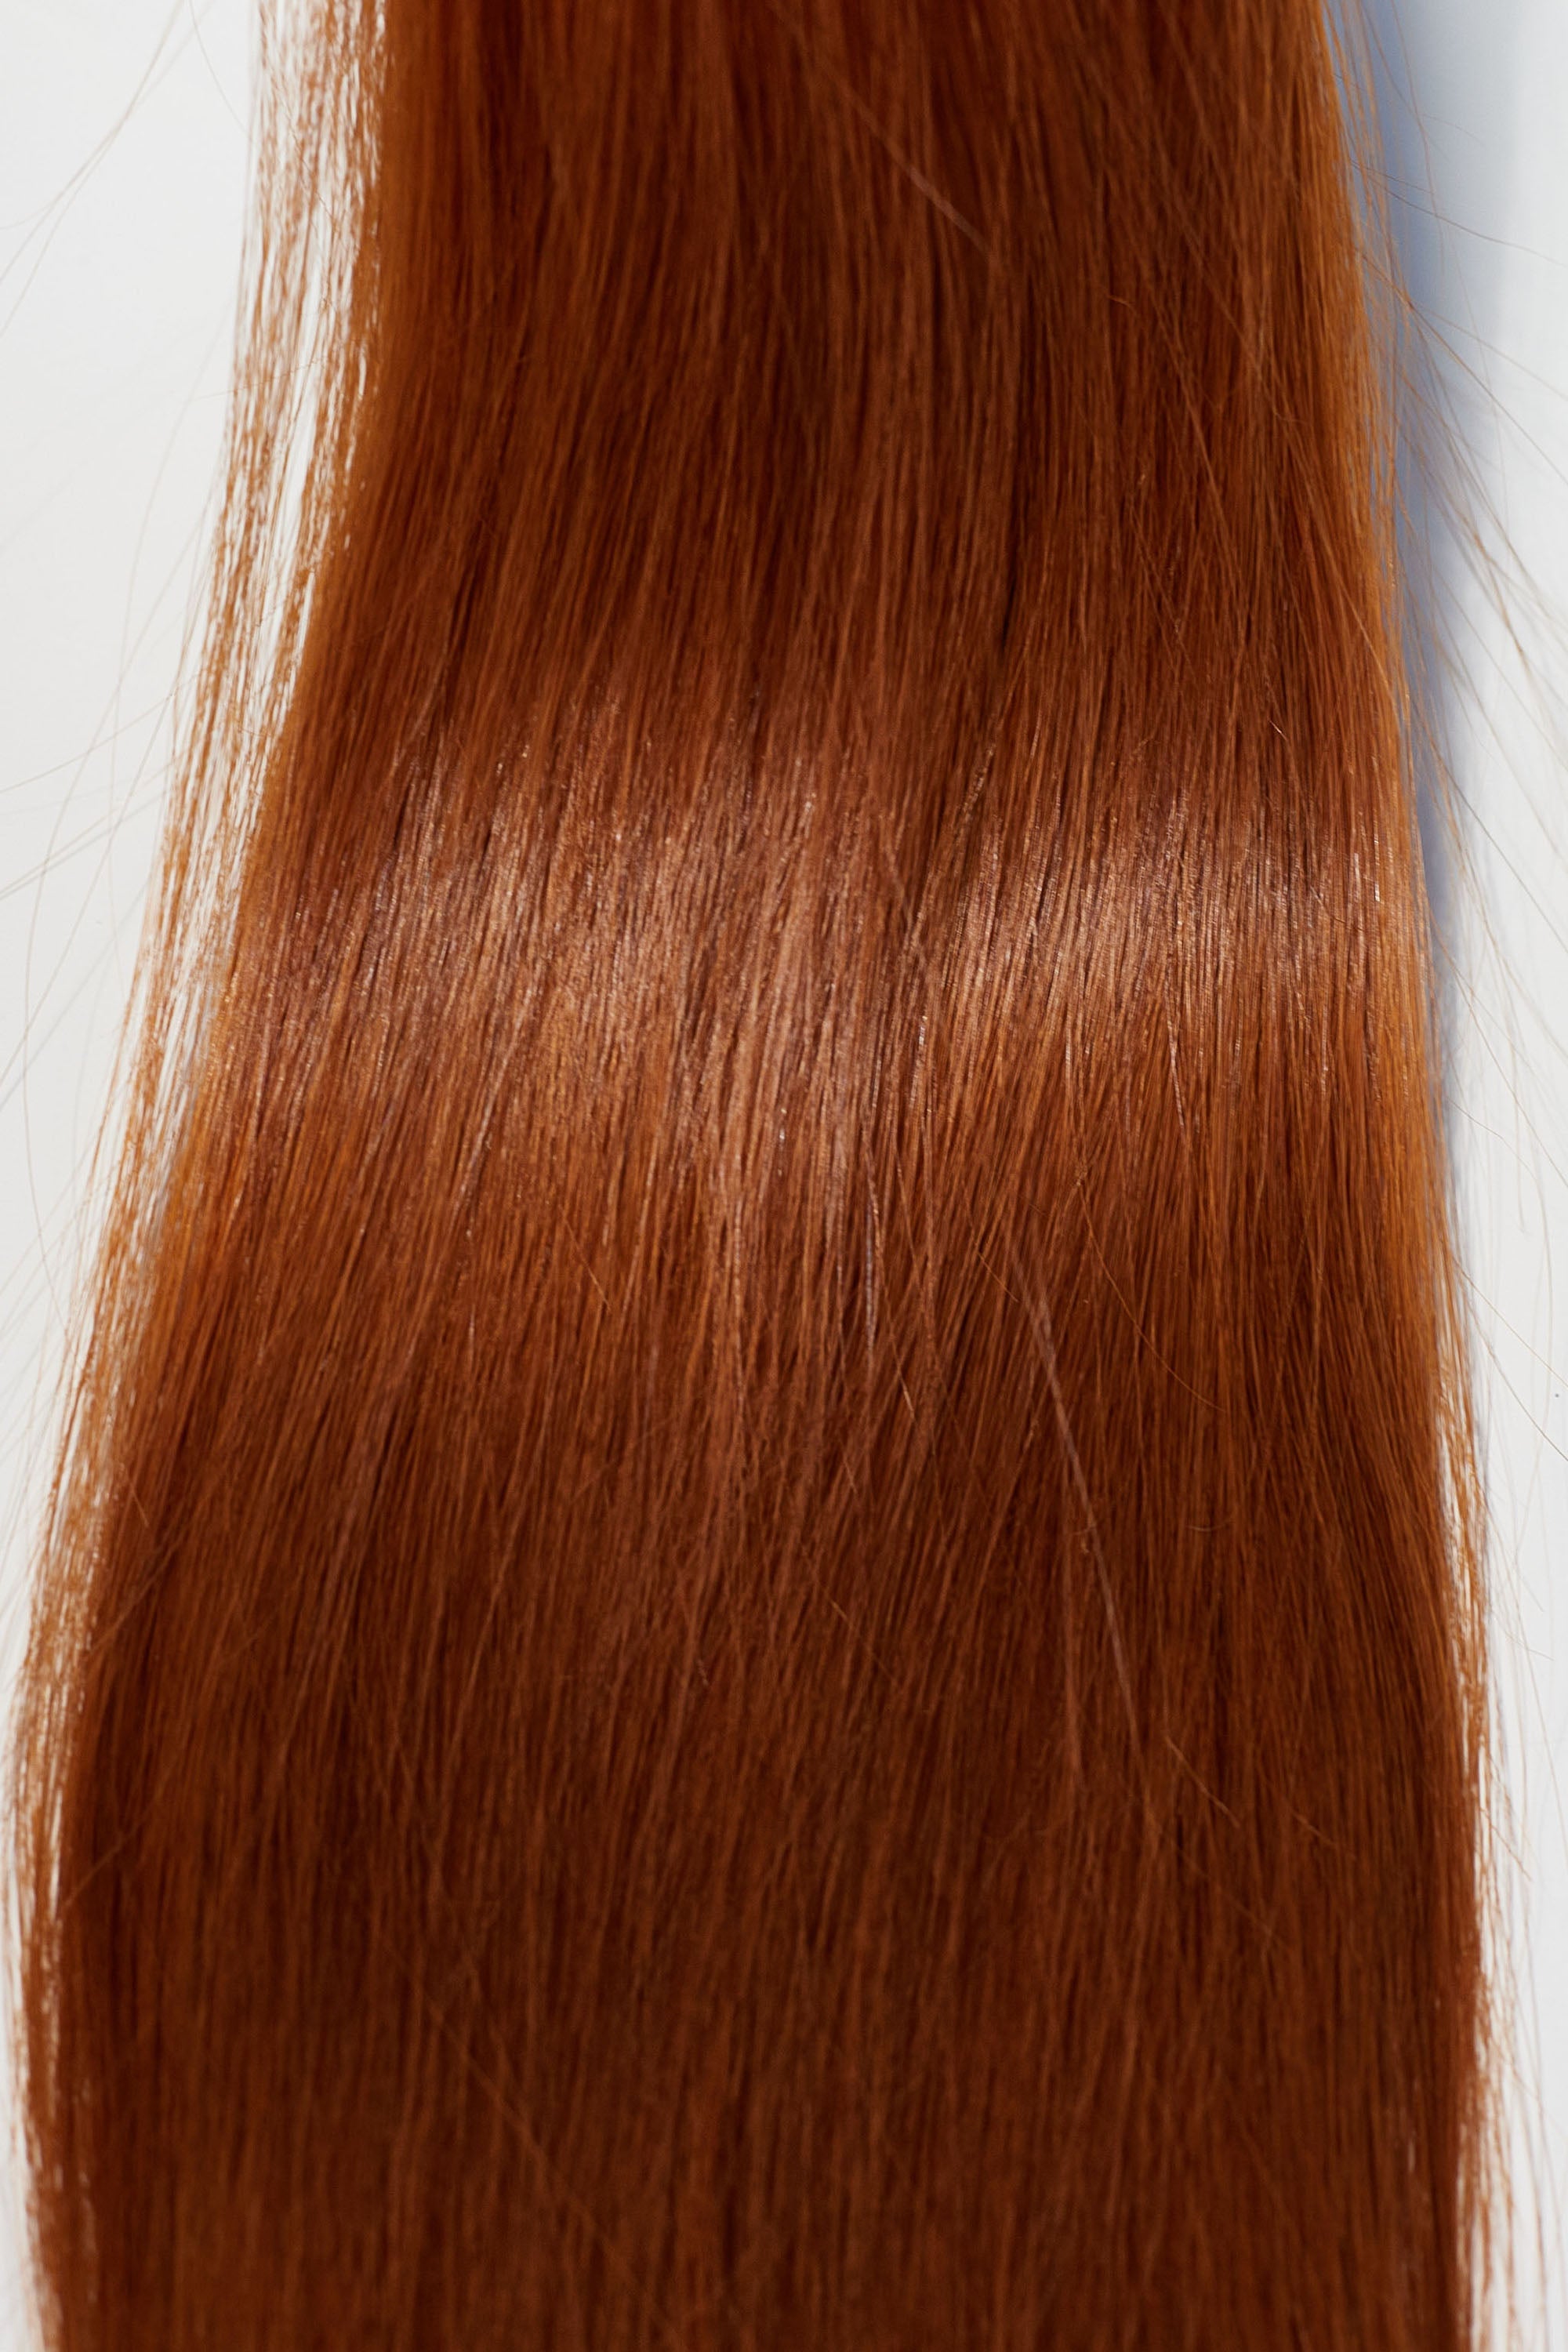 Behair professional Keratin Tip "Premium" 22" (55cm) Natural Straight Brilliant Copper #130 - 25g (Standart - 0.7g each pcs) hair extensions